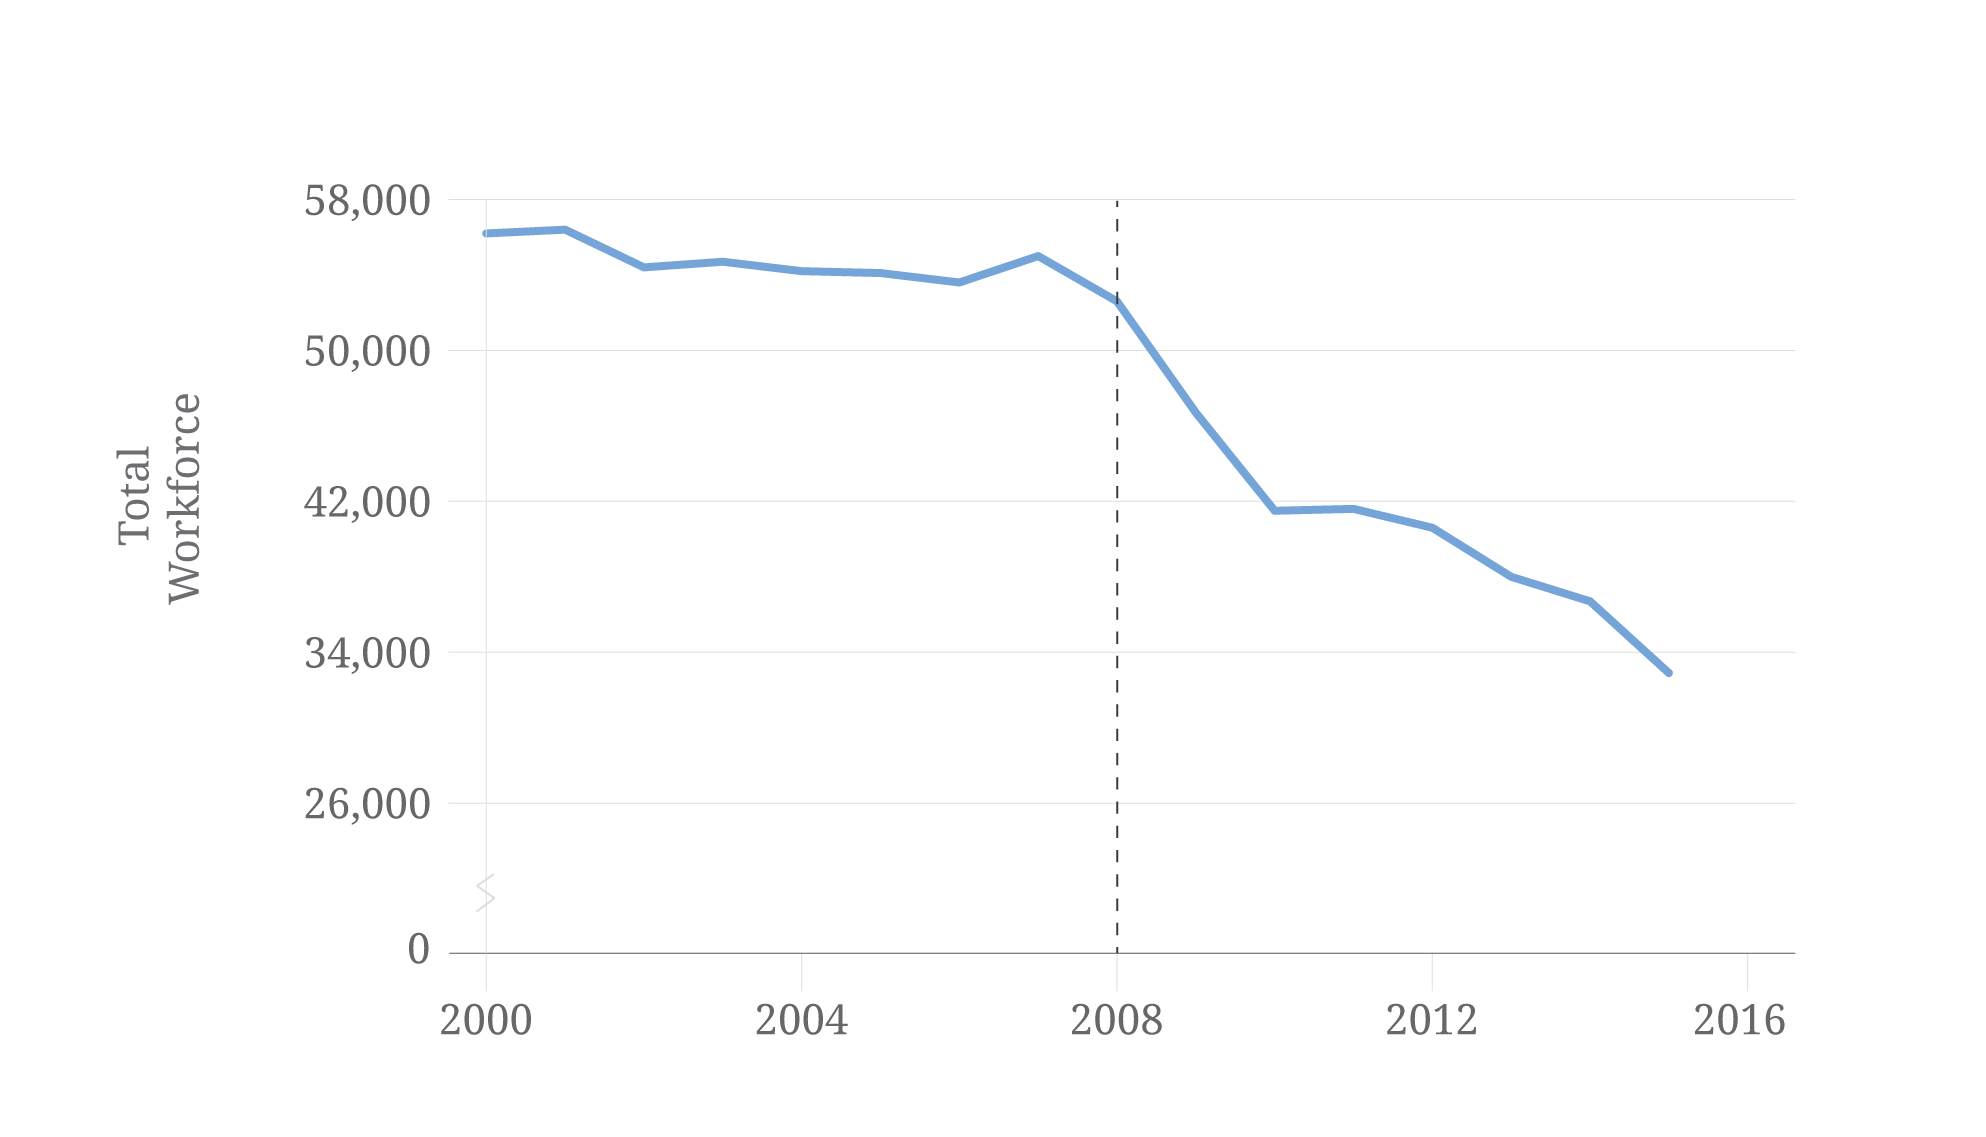 Figure 1. Newsroom employees at U.S. Newspapers, 2000-2015